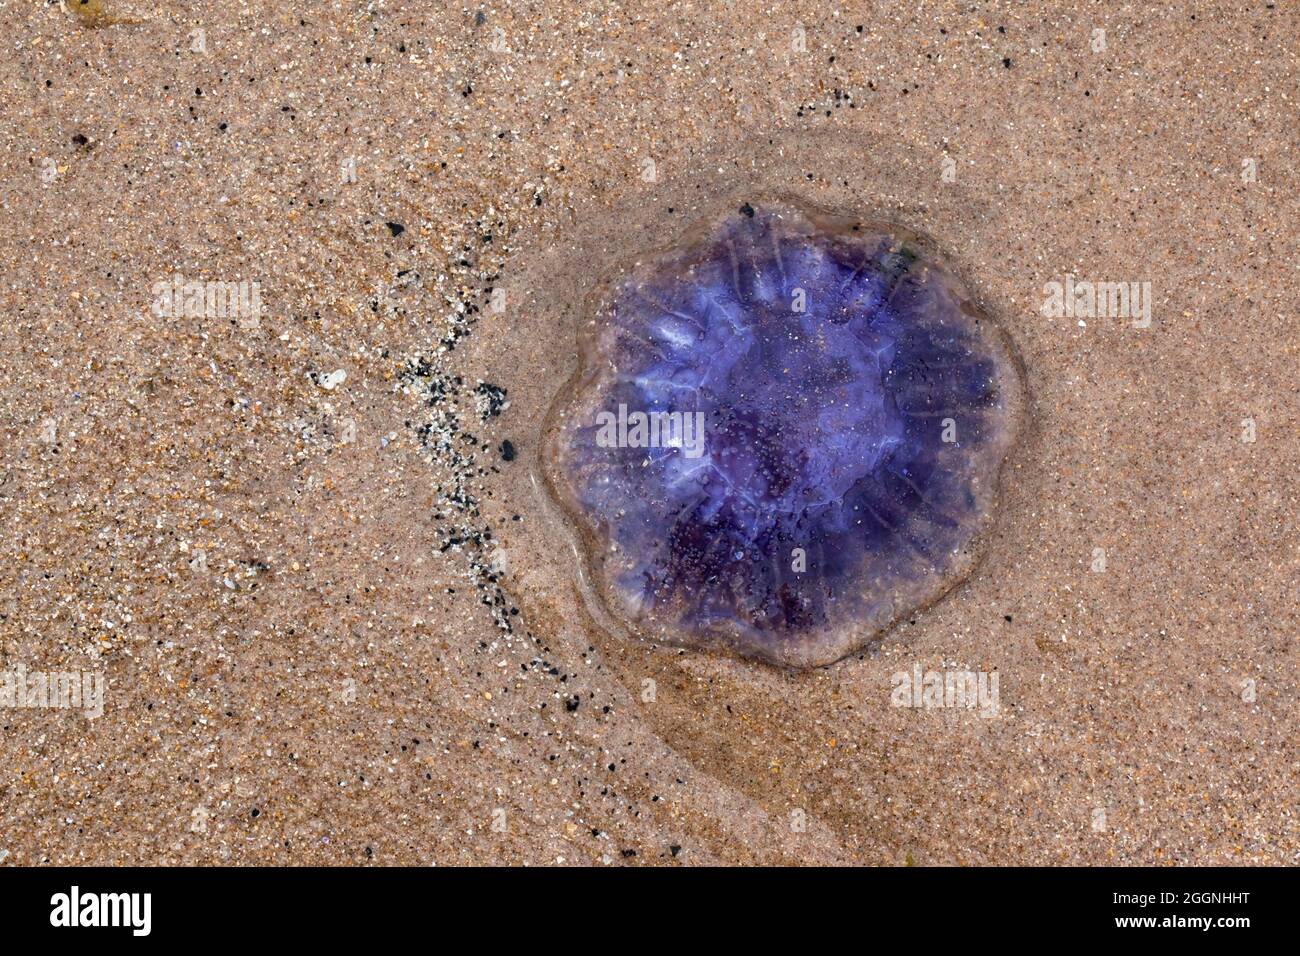 Common blue jellyfish (Cyanea lamarckii), washed up on beach, Northumberland, UK Stock Photo